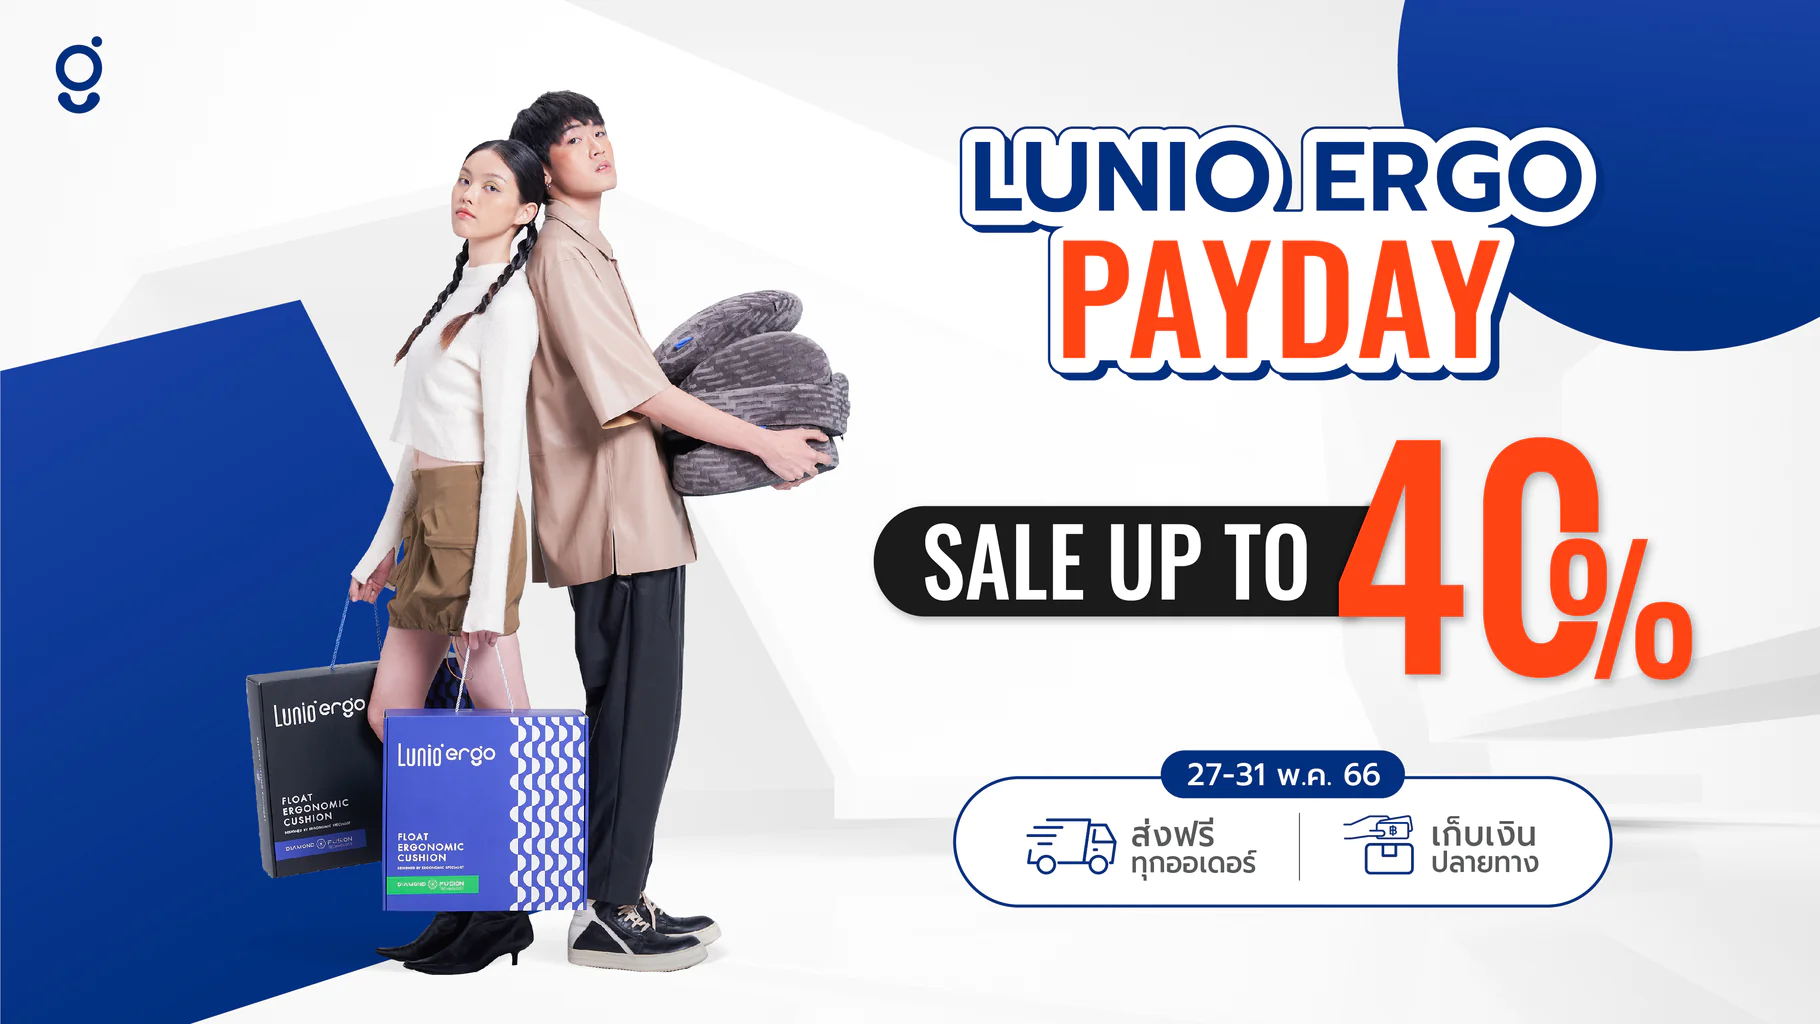 Size PC Promotion Lunio Ergo Payday 26May